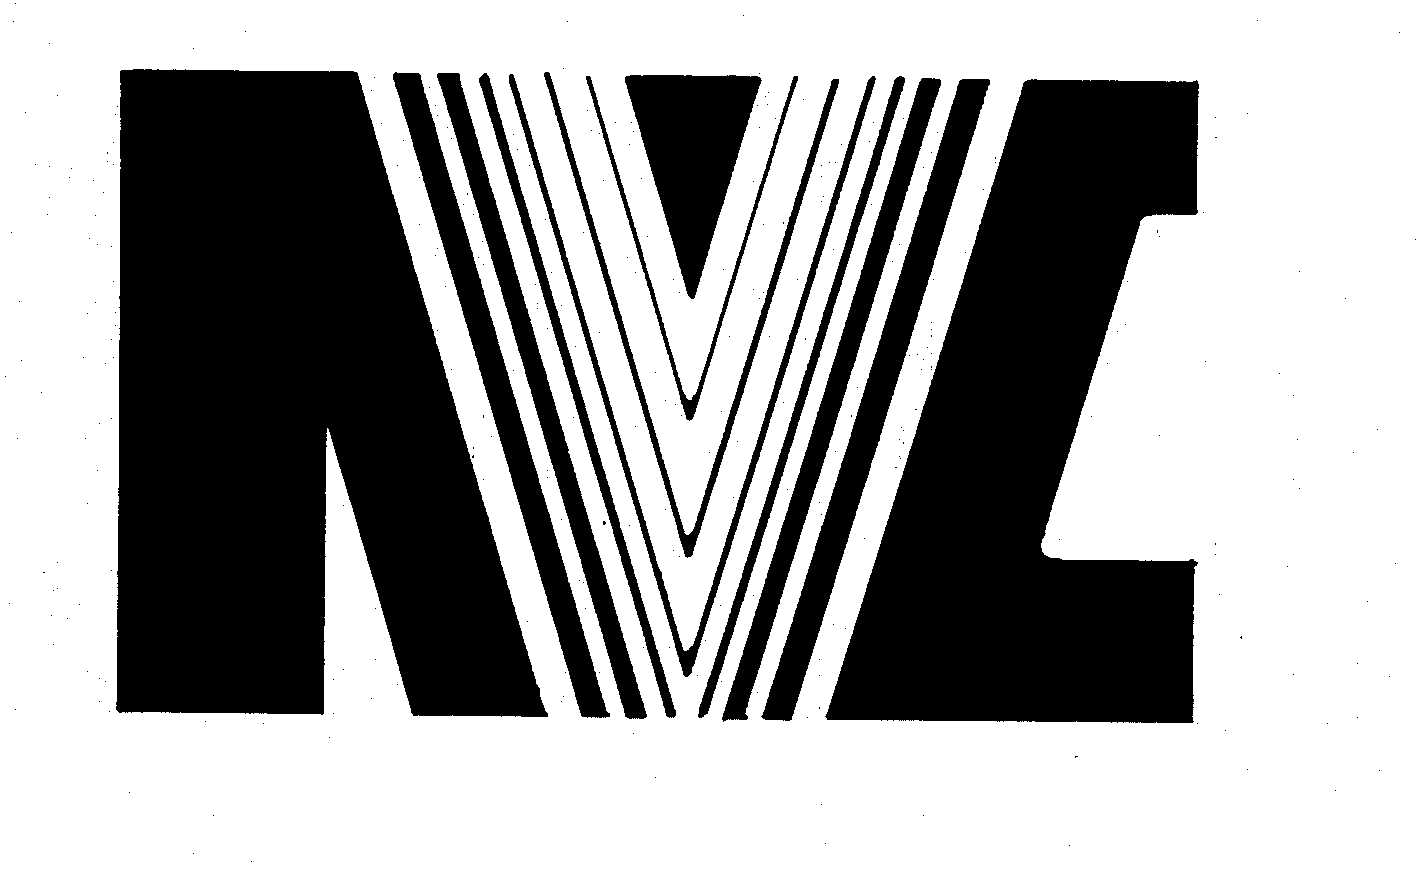 Trademark Logo NVC